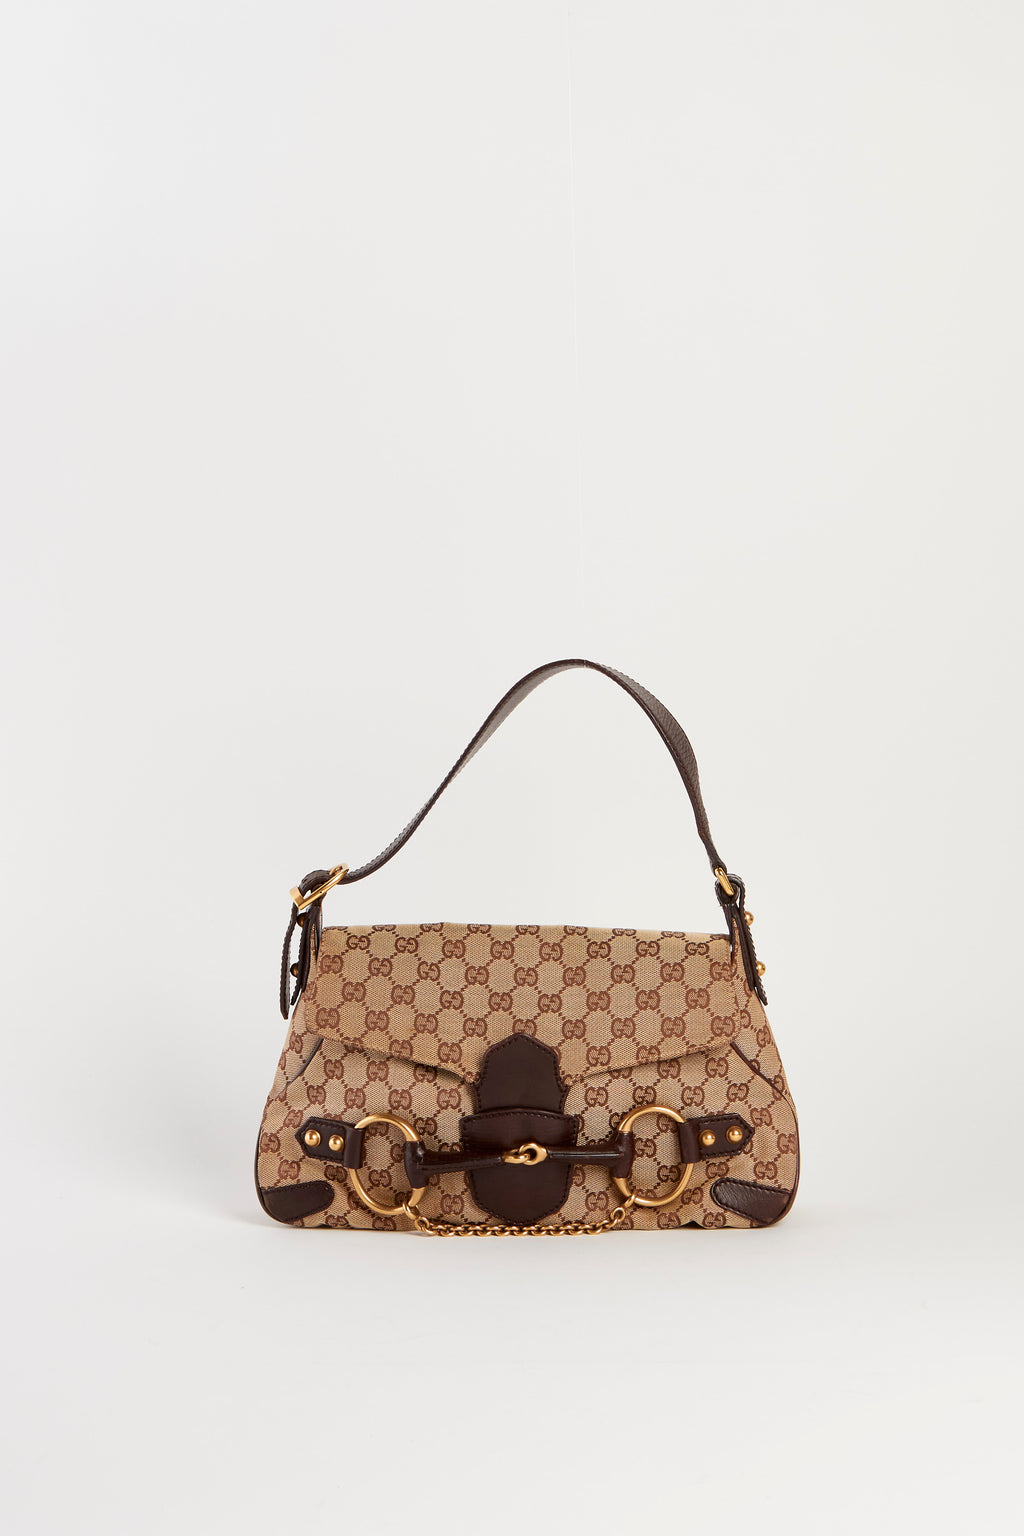 Vintage Gucci Classic GG Monogram Horsebit Shoulder Bag